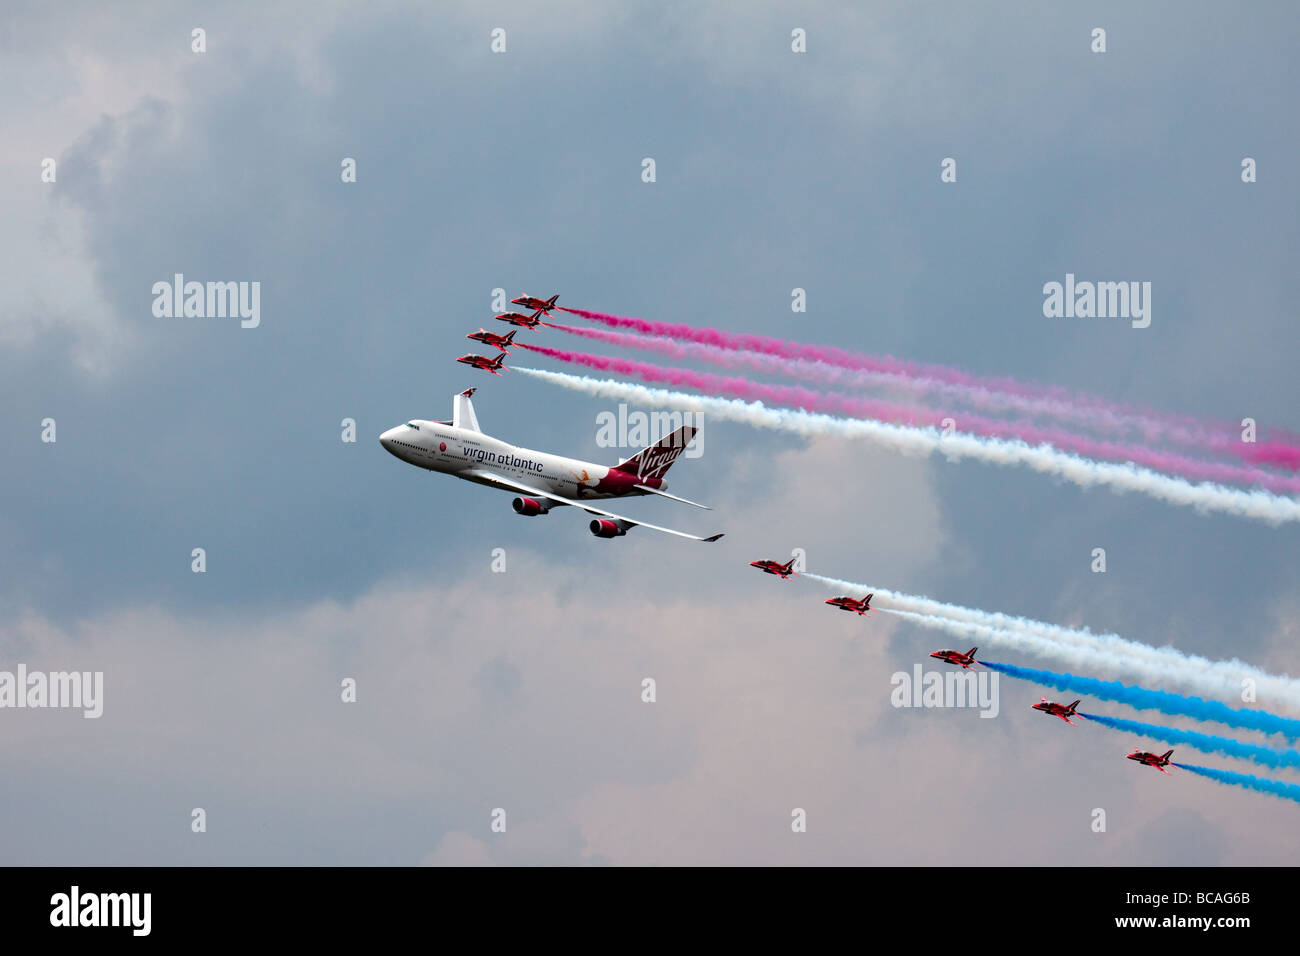 Virgin Atlantic - Boeing 747-400 and Red Arrows aerial display at Biggin Hill Airshow Stock Photo